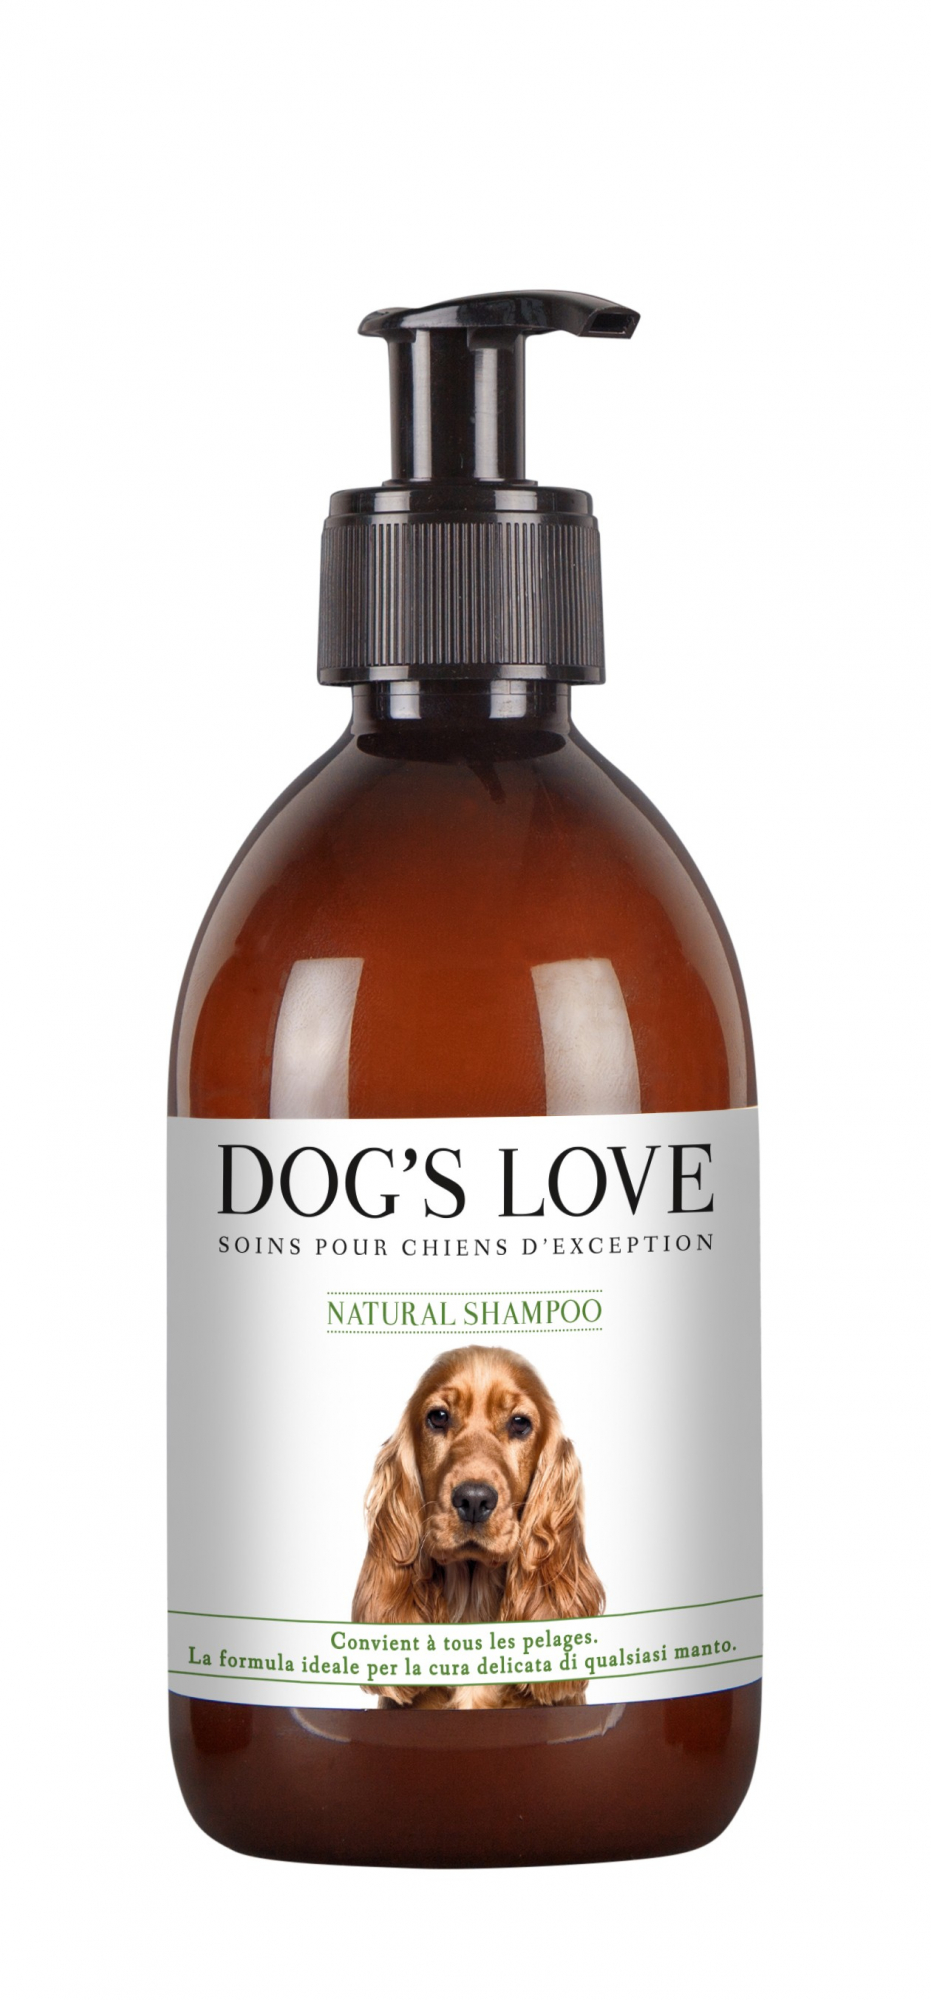 Shampoo Dog's Love Natural hondenshampoo